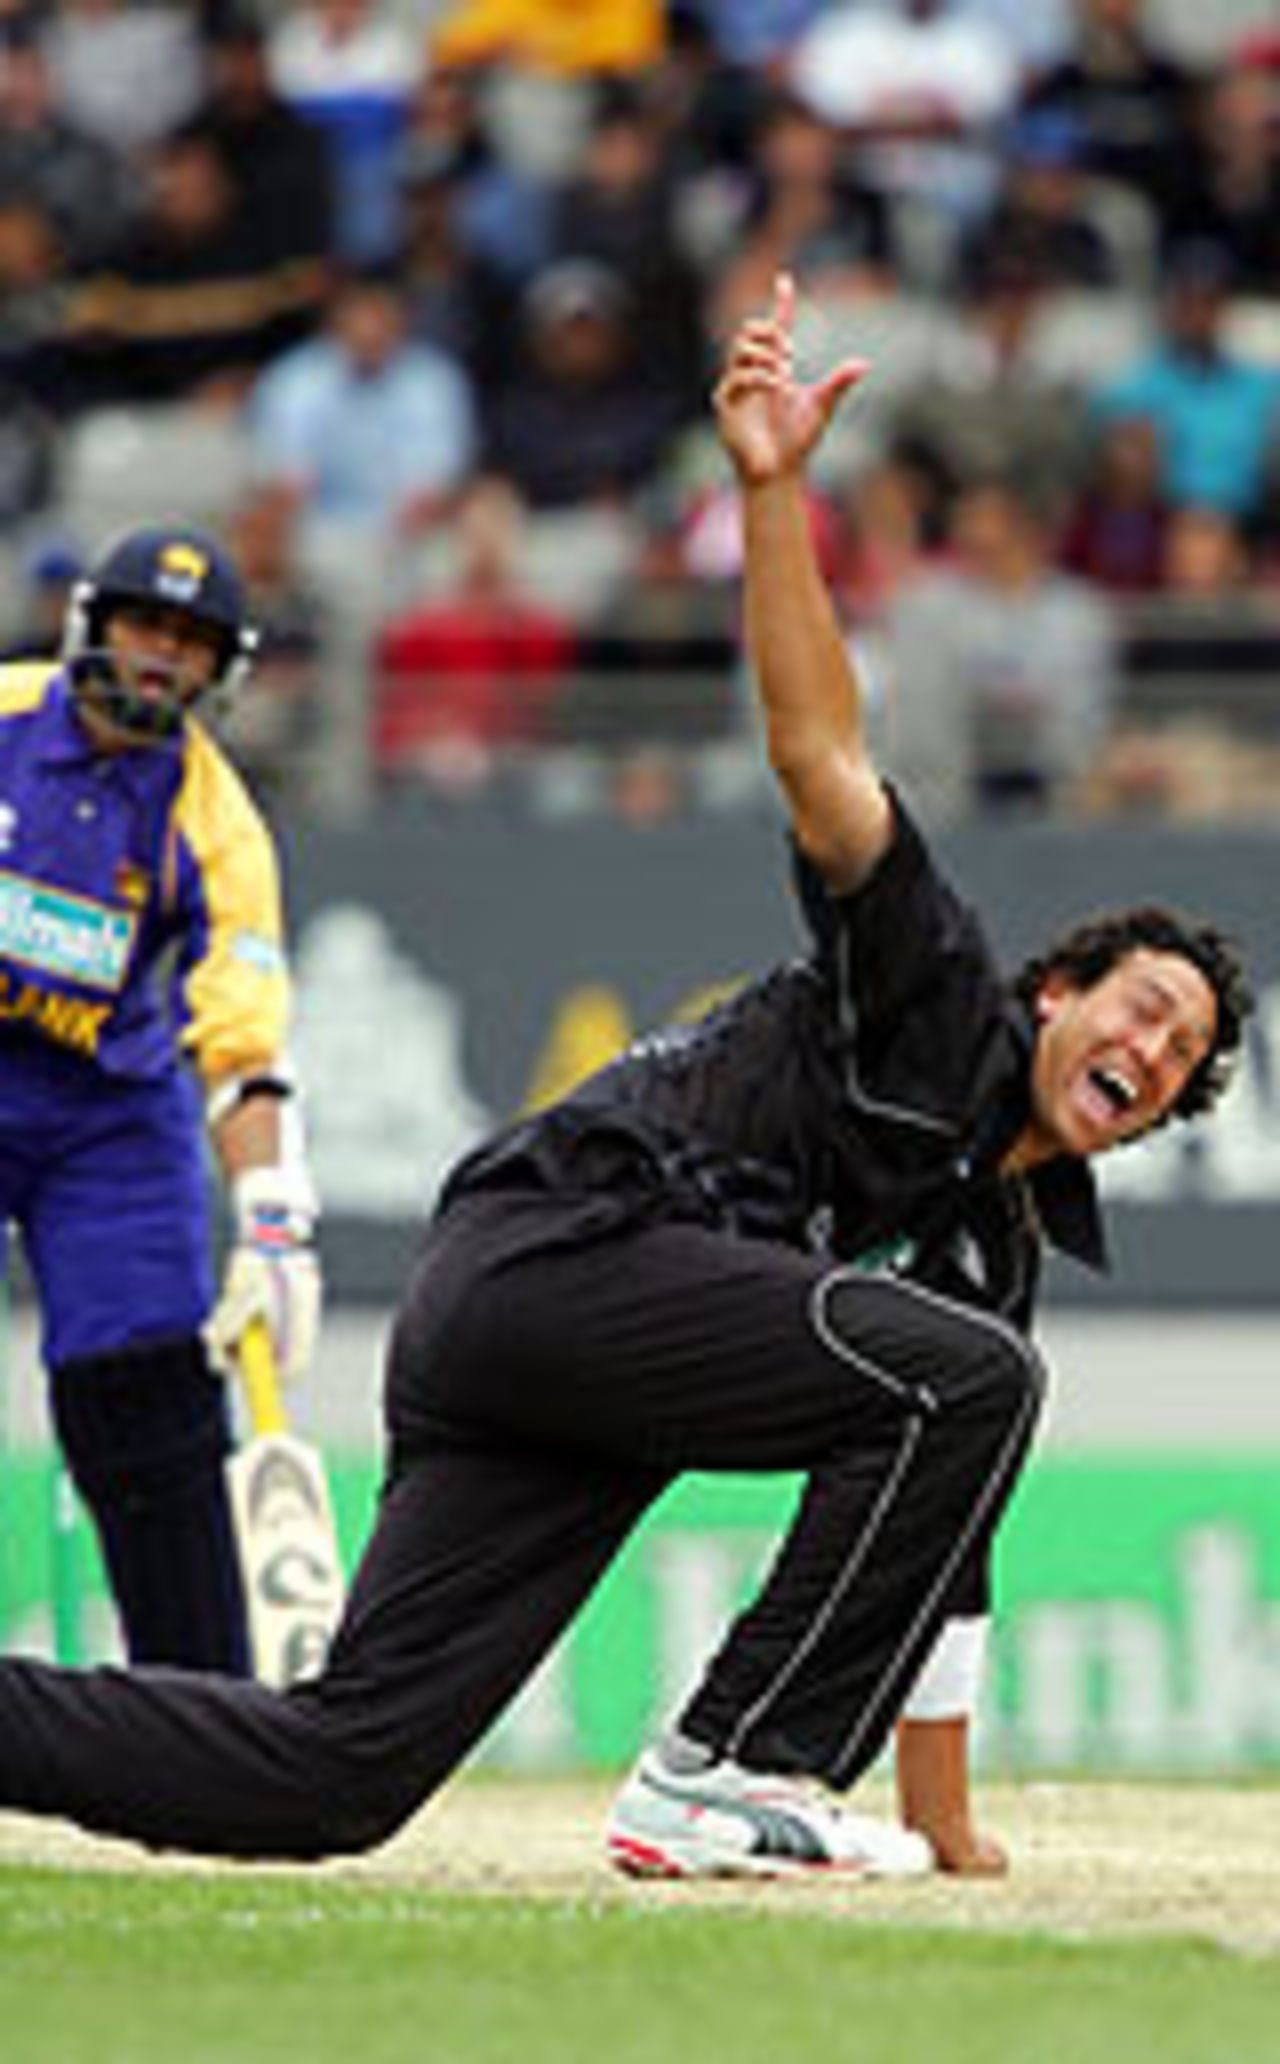 Daryl Tuffey on the ground appealing, New Zealand v Sri Lanka, 1st ODI, Auckland, December 26, 2004